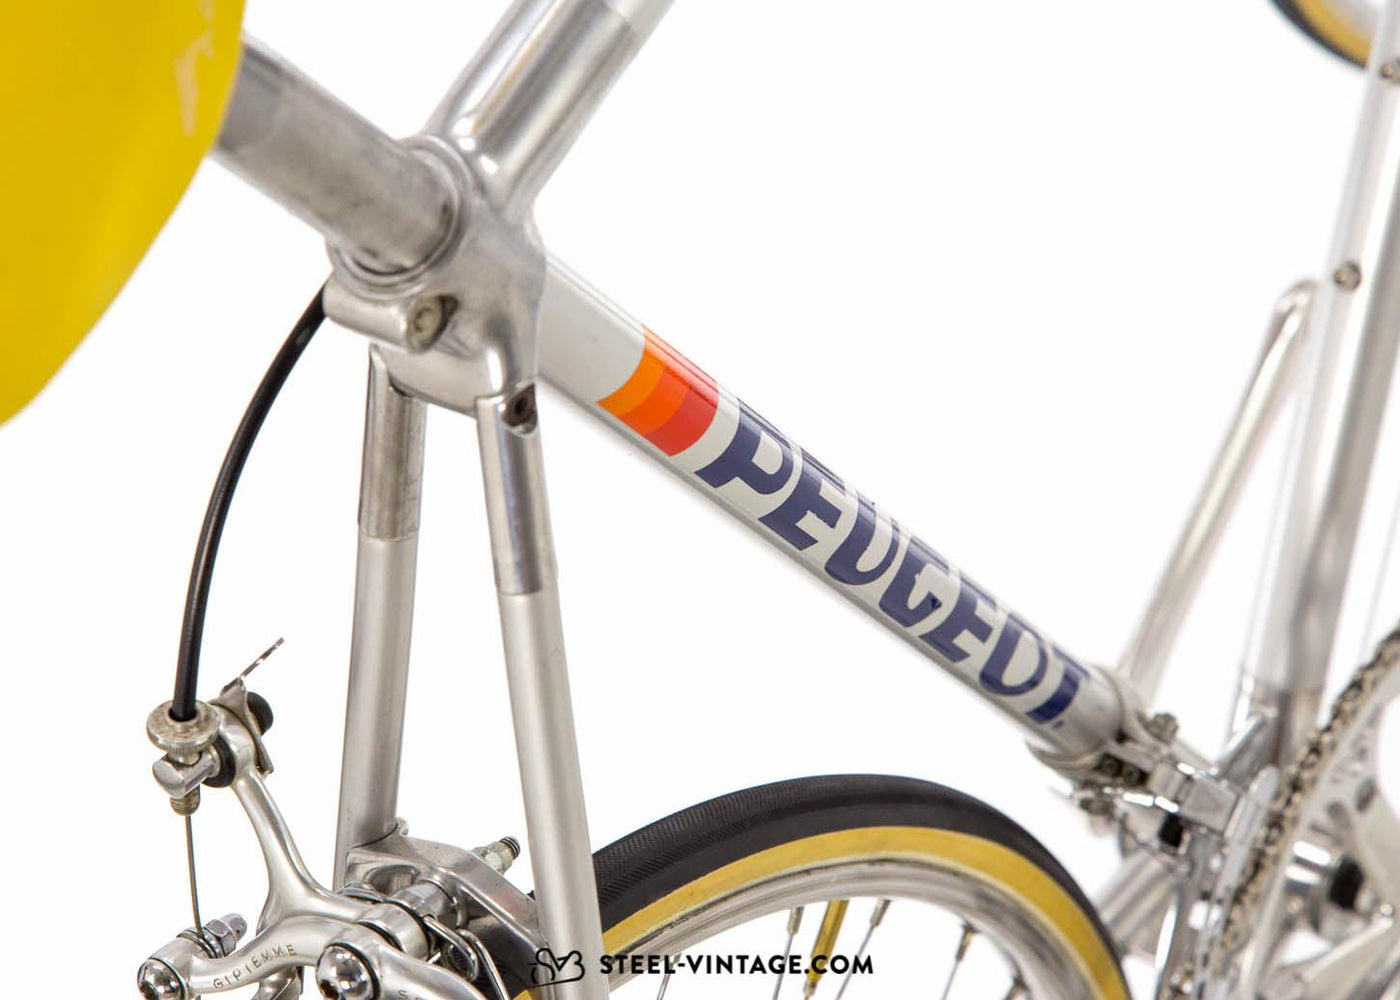 Peugeot Comete Vintage Aluminium Road Bike 1980s - Steel Vintage Bikes